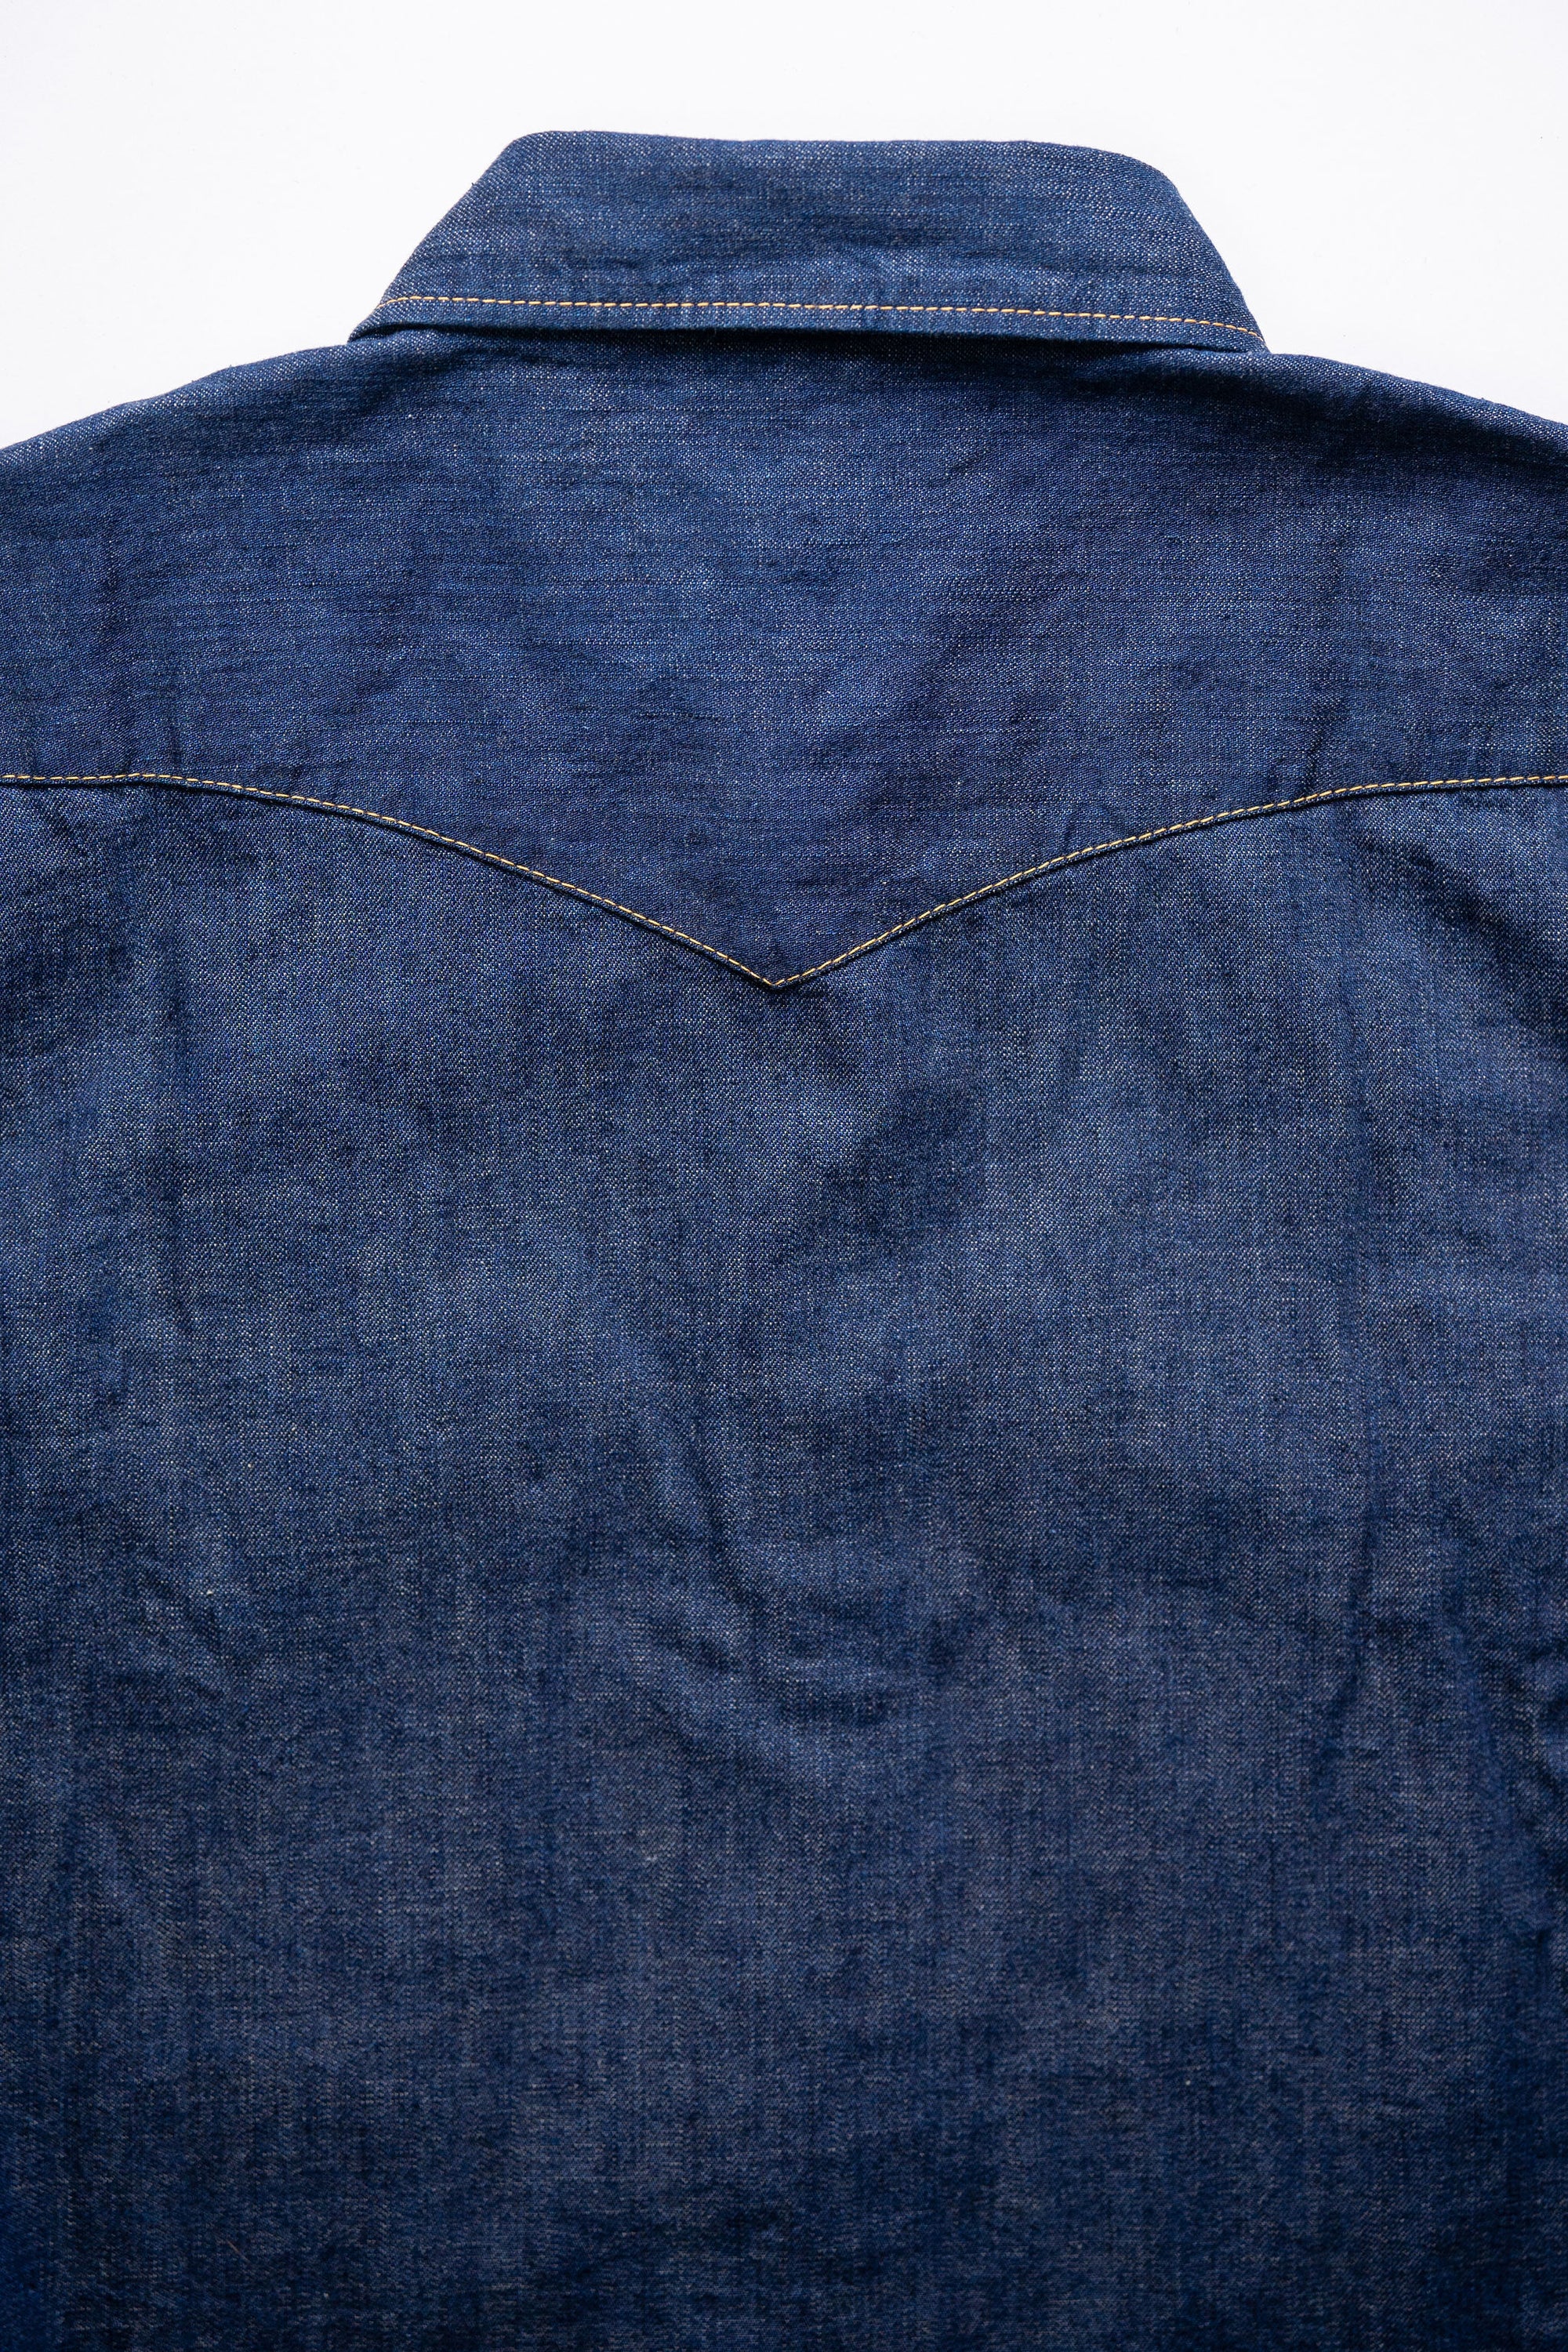 Fullcount 4898 Denim Western Shirt - Indigo Blue